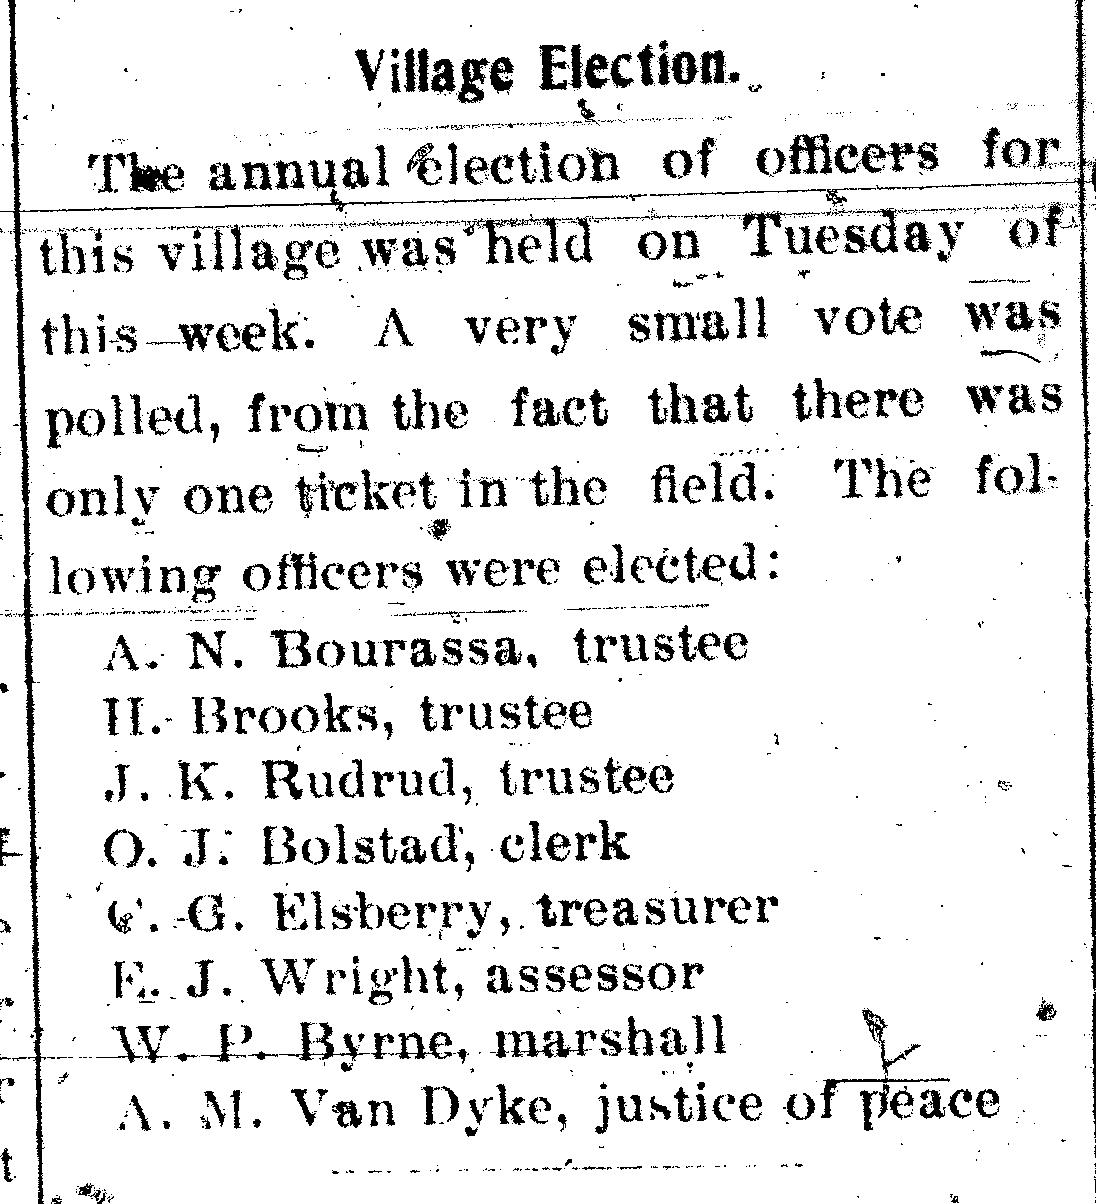 St. John N.D. Village Officer Election Results  March 1908